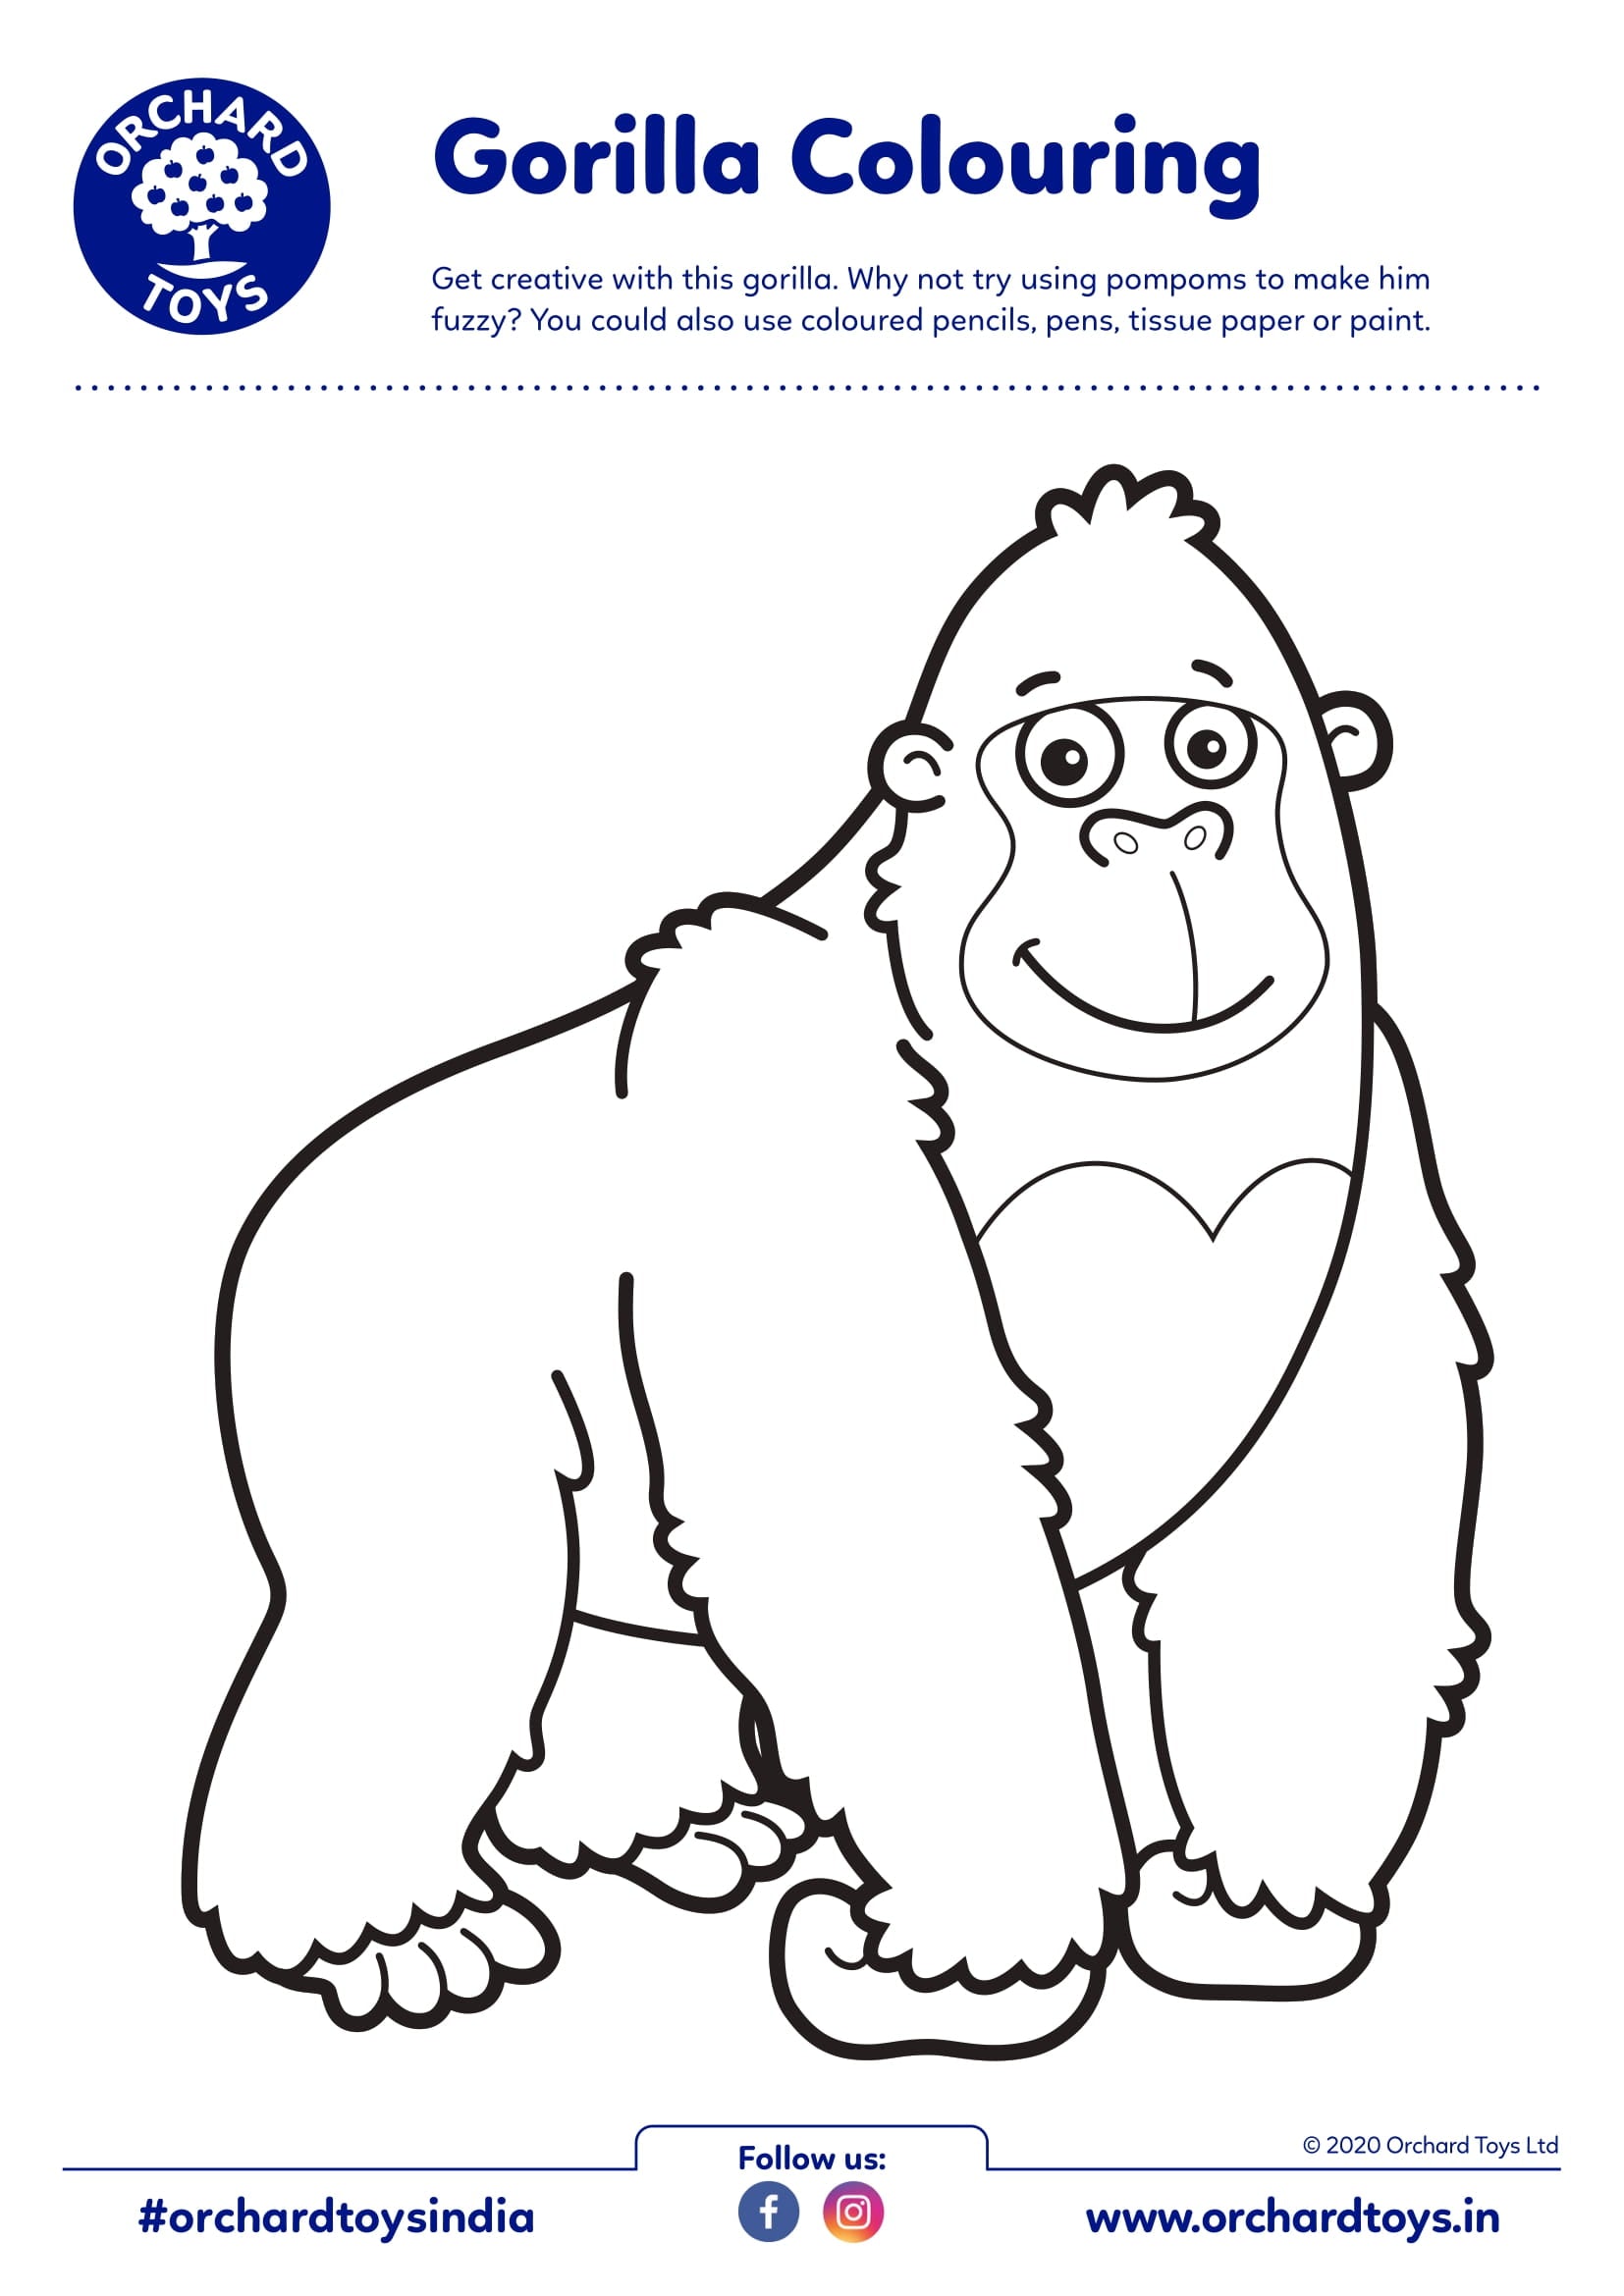 Gorilla Coloring Activity Sheet